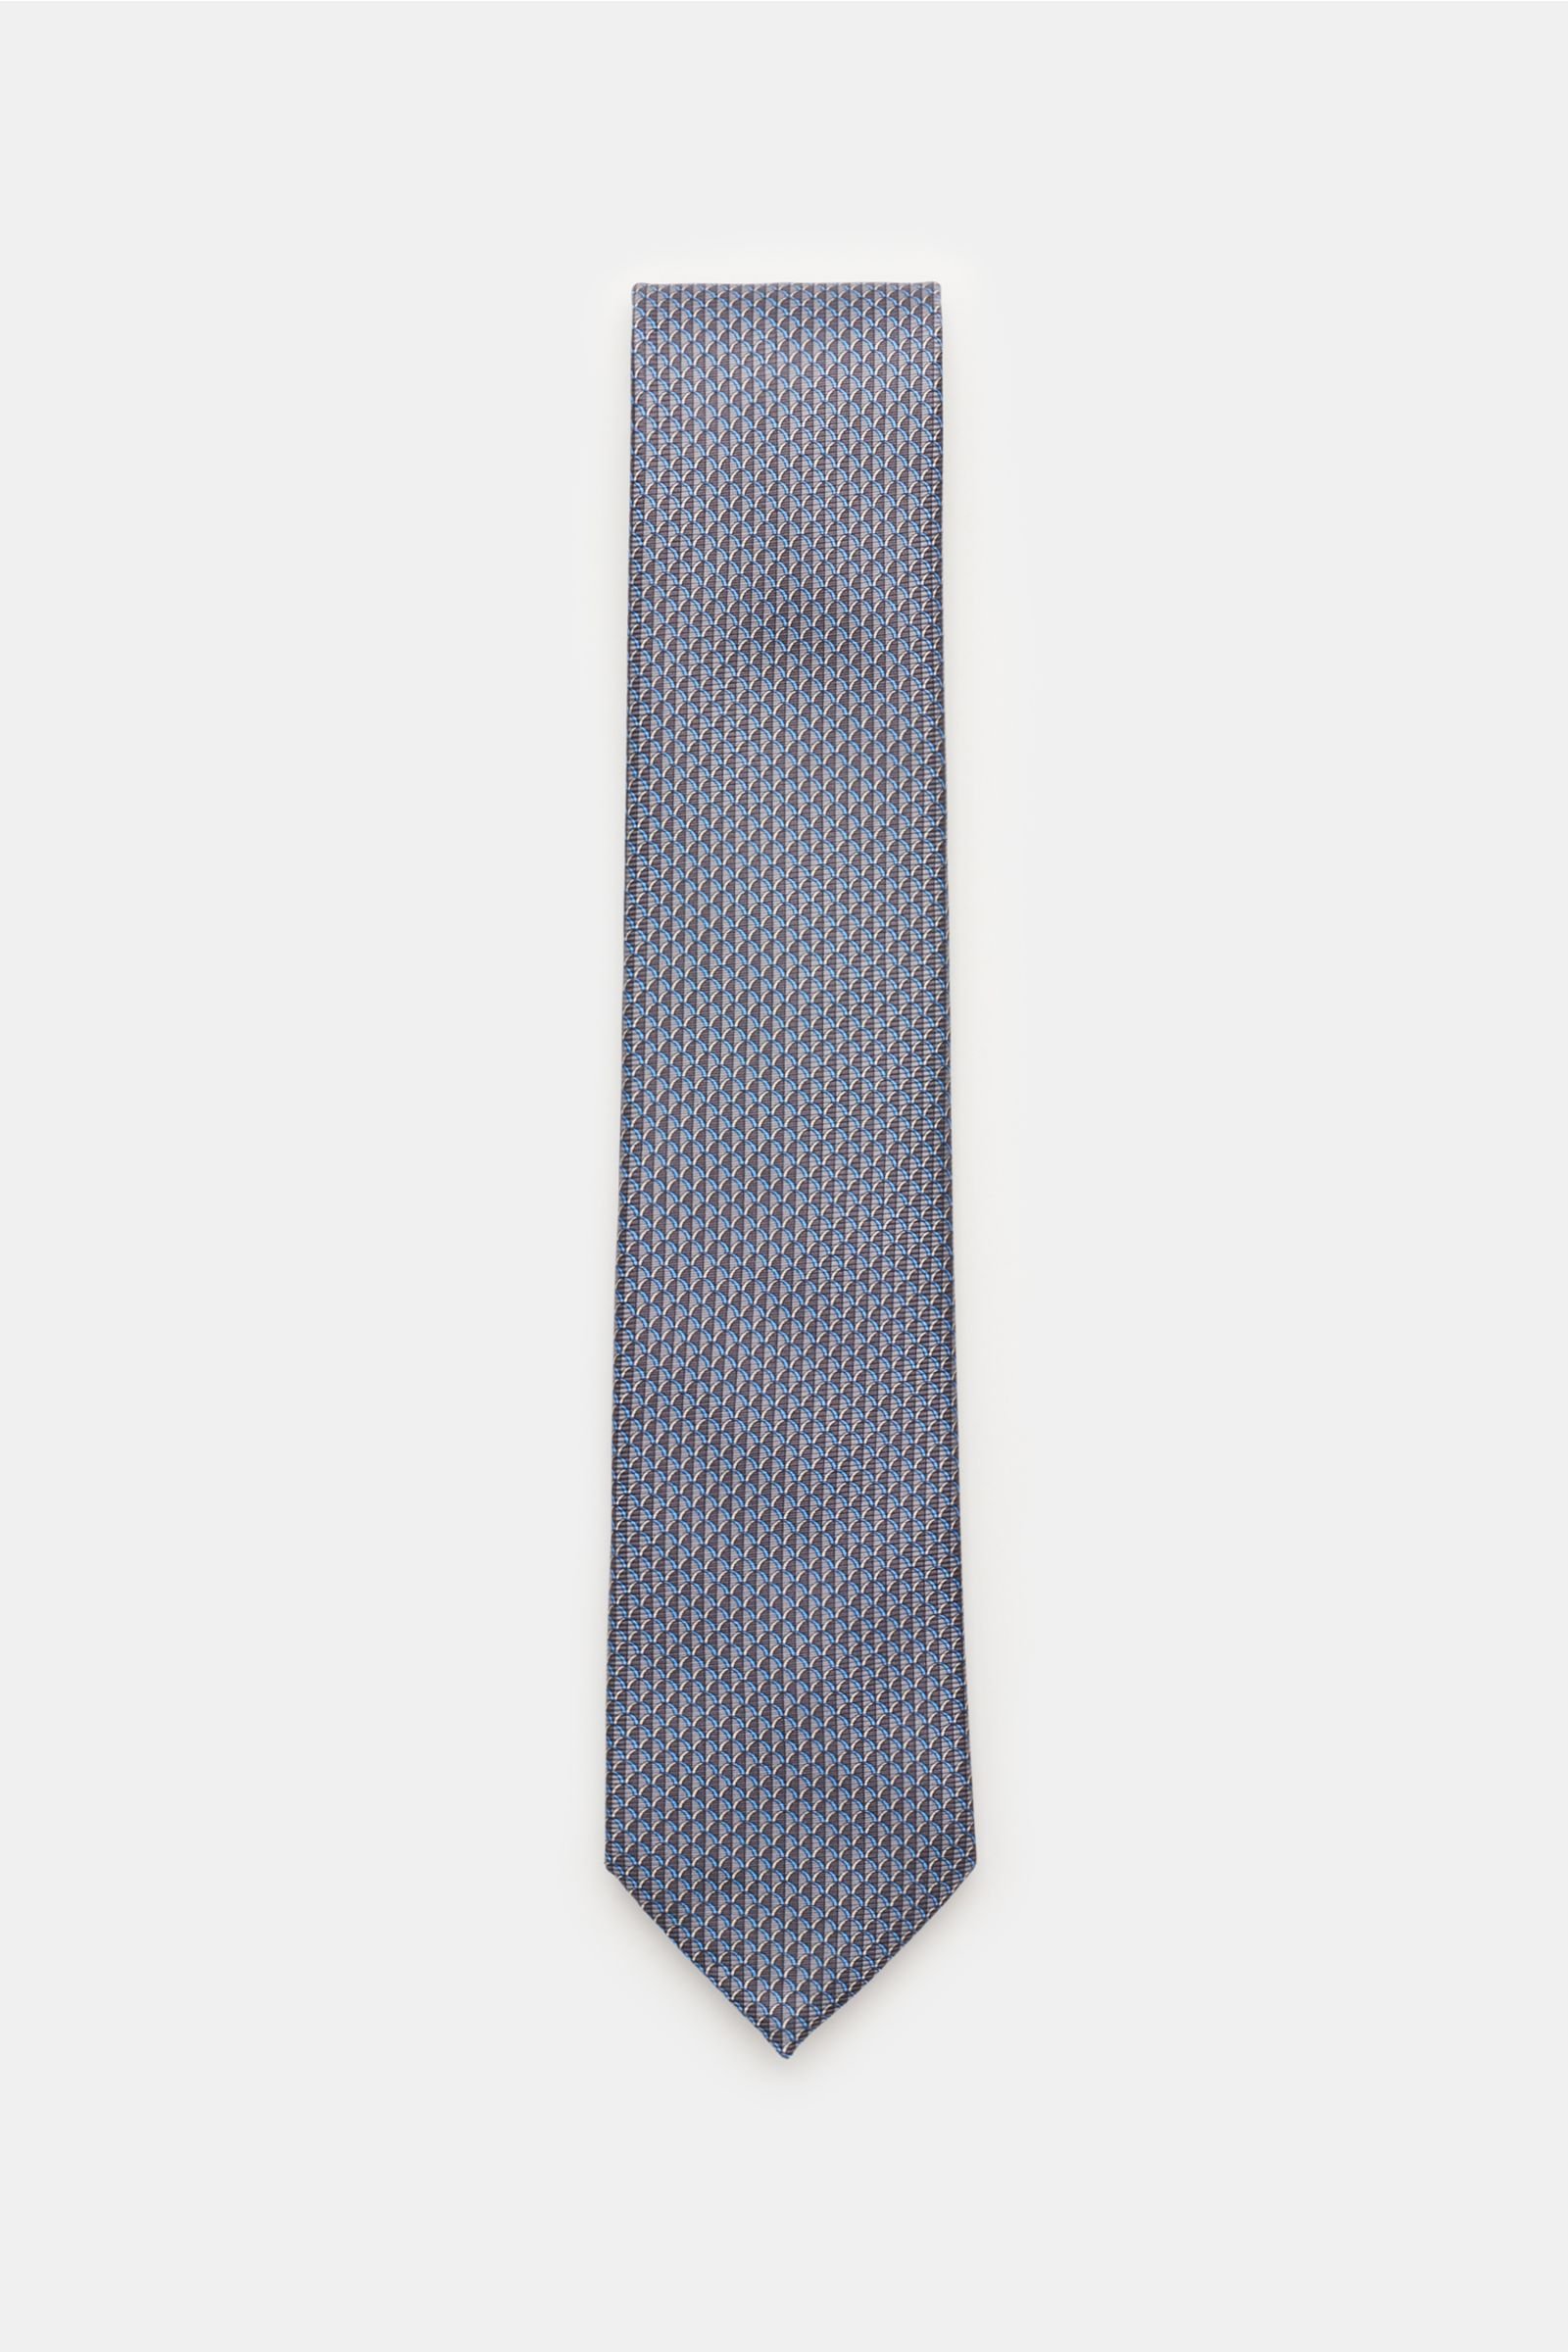 Silk tie grey patterned